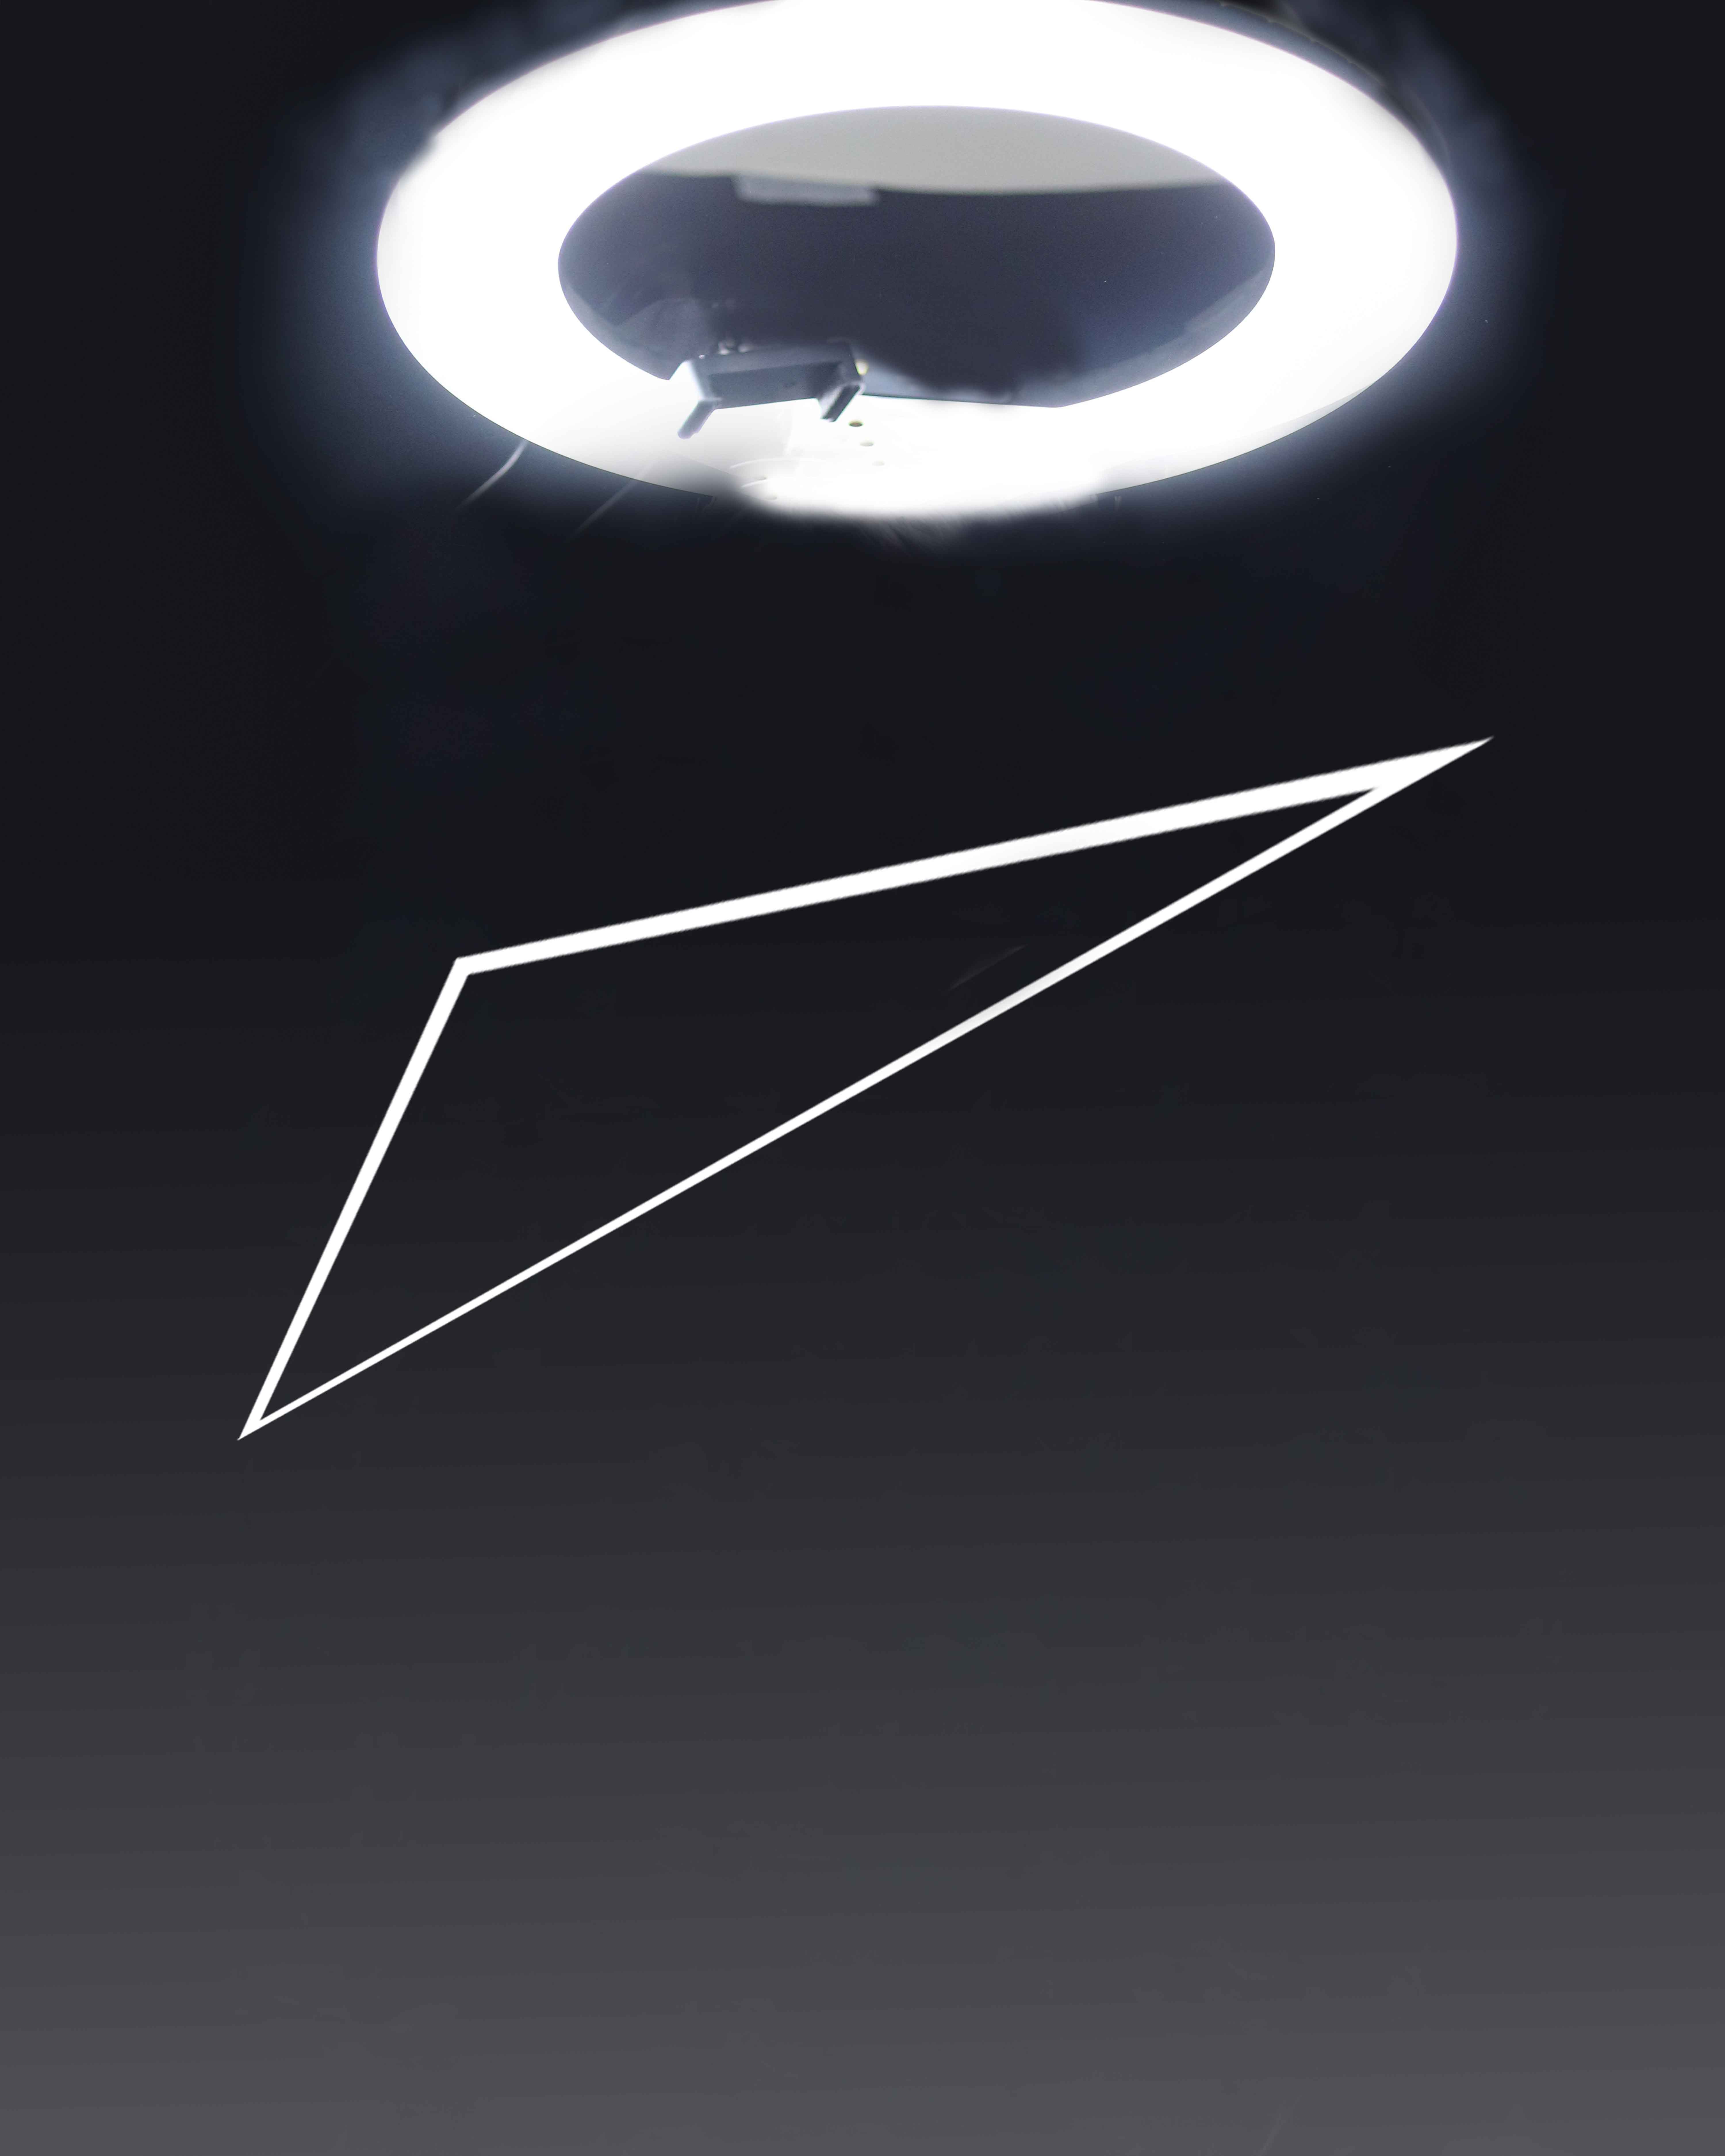 PicsArt - Ring Light Concept Photo Editing || Ghaus Editz - YouTube